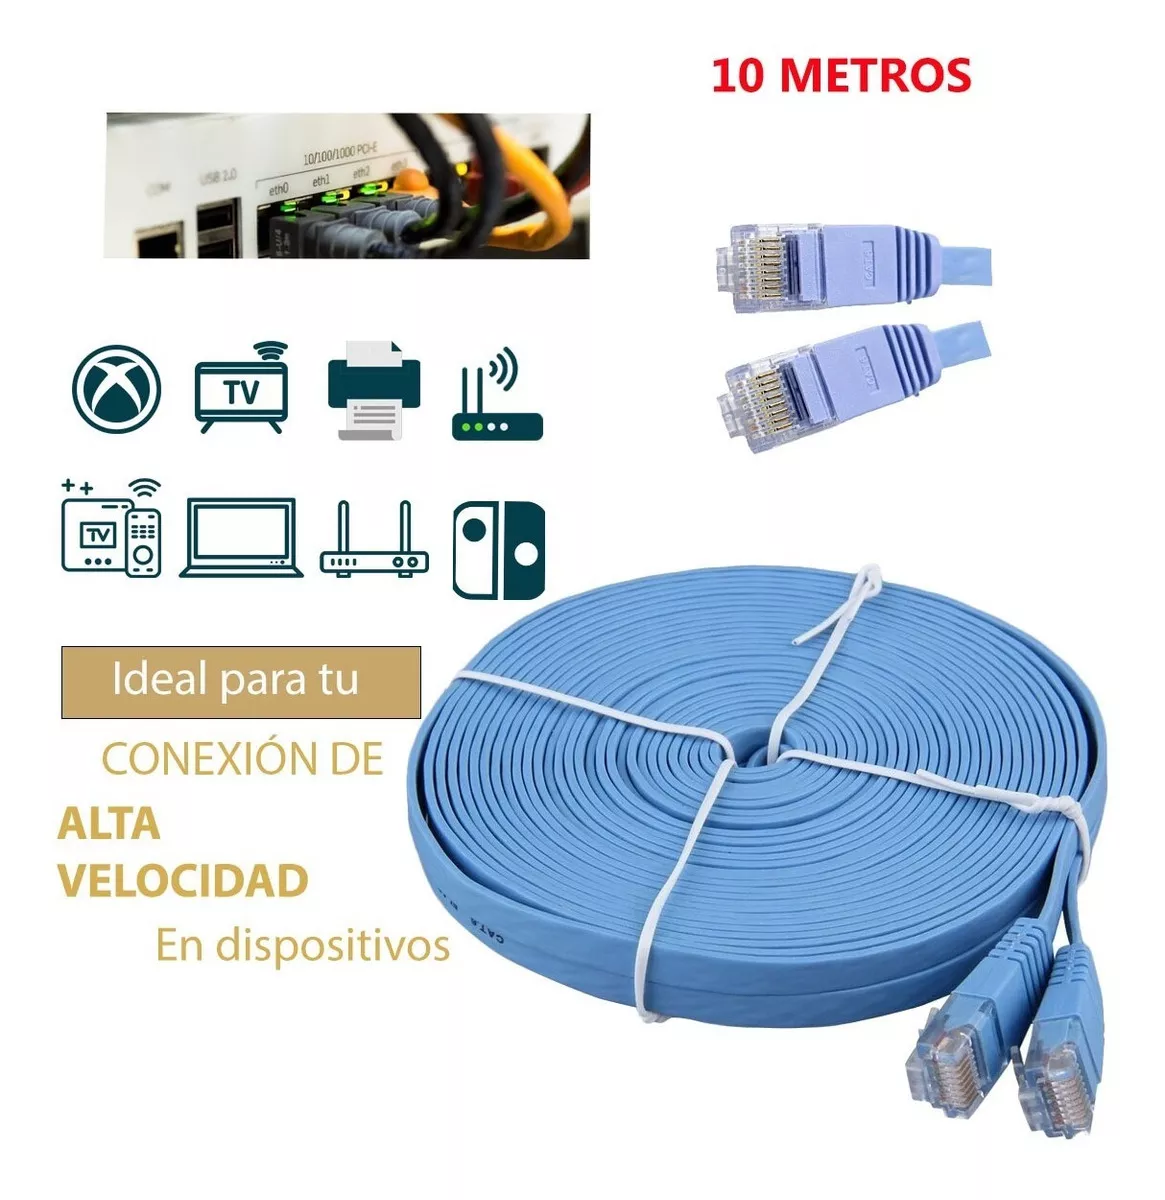 Segunda imagen para búsqueda de cable ethernet 10 metros